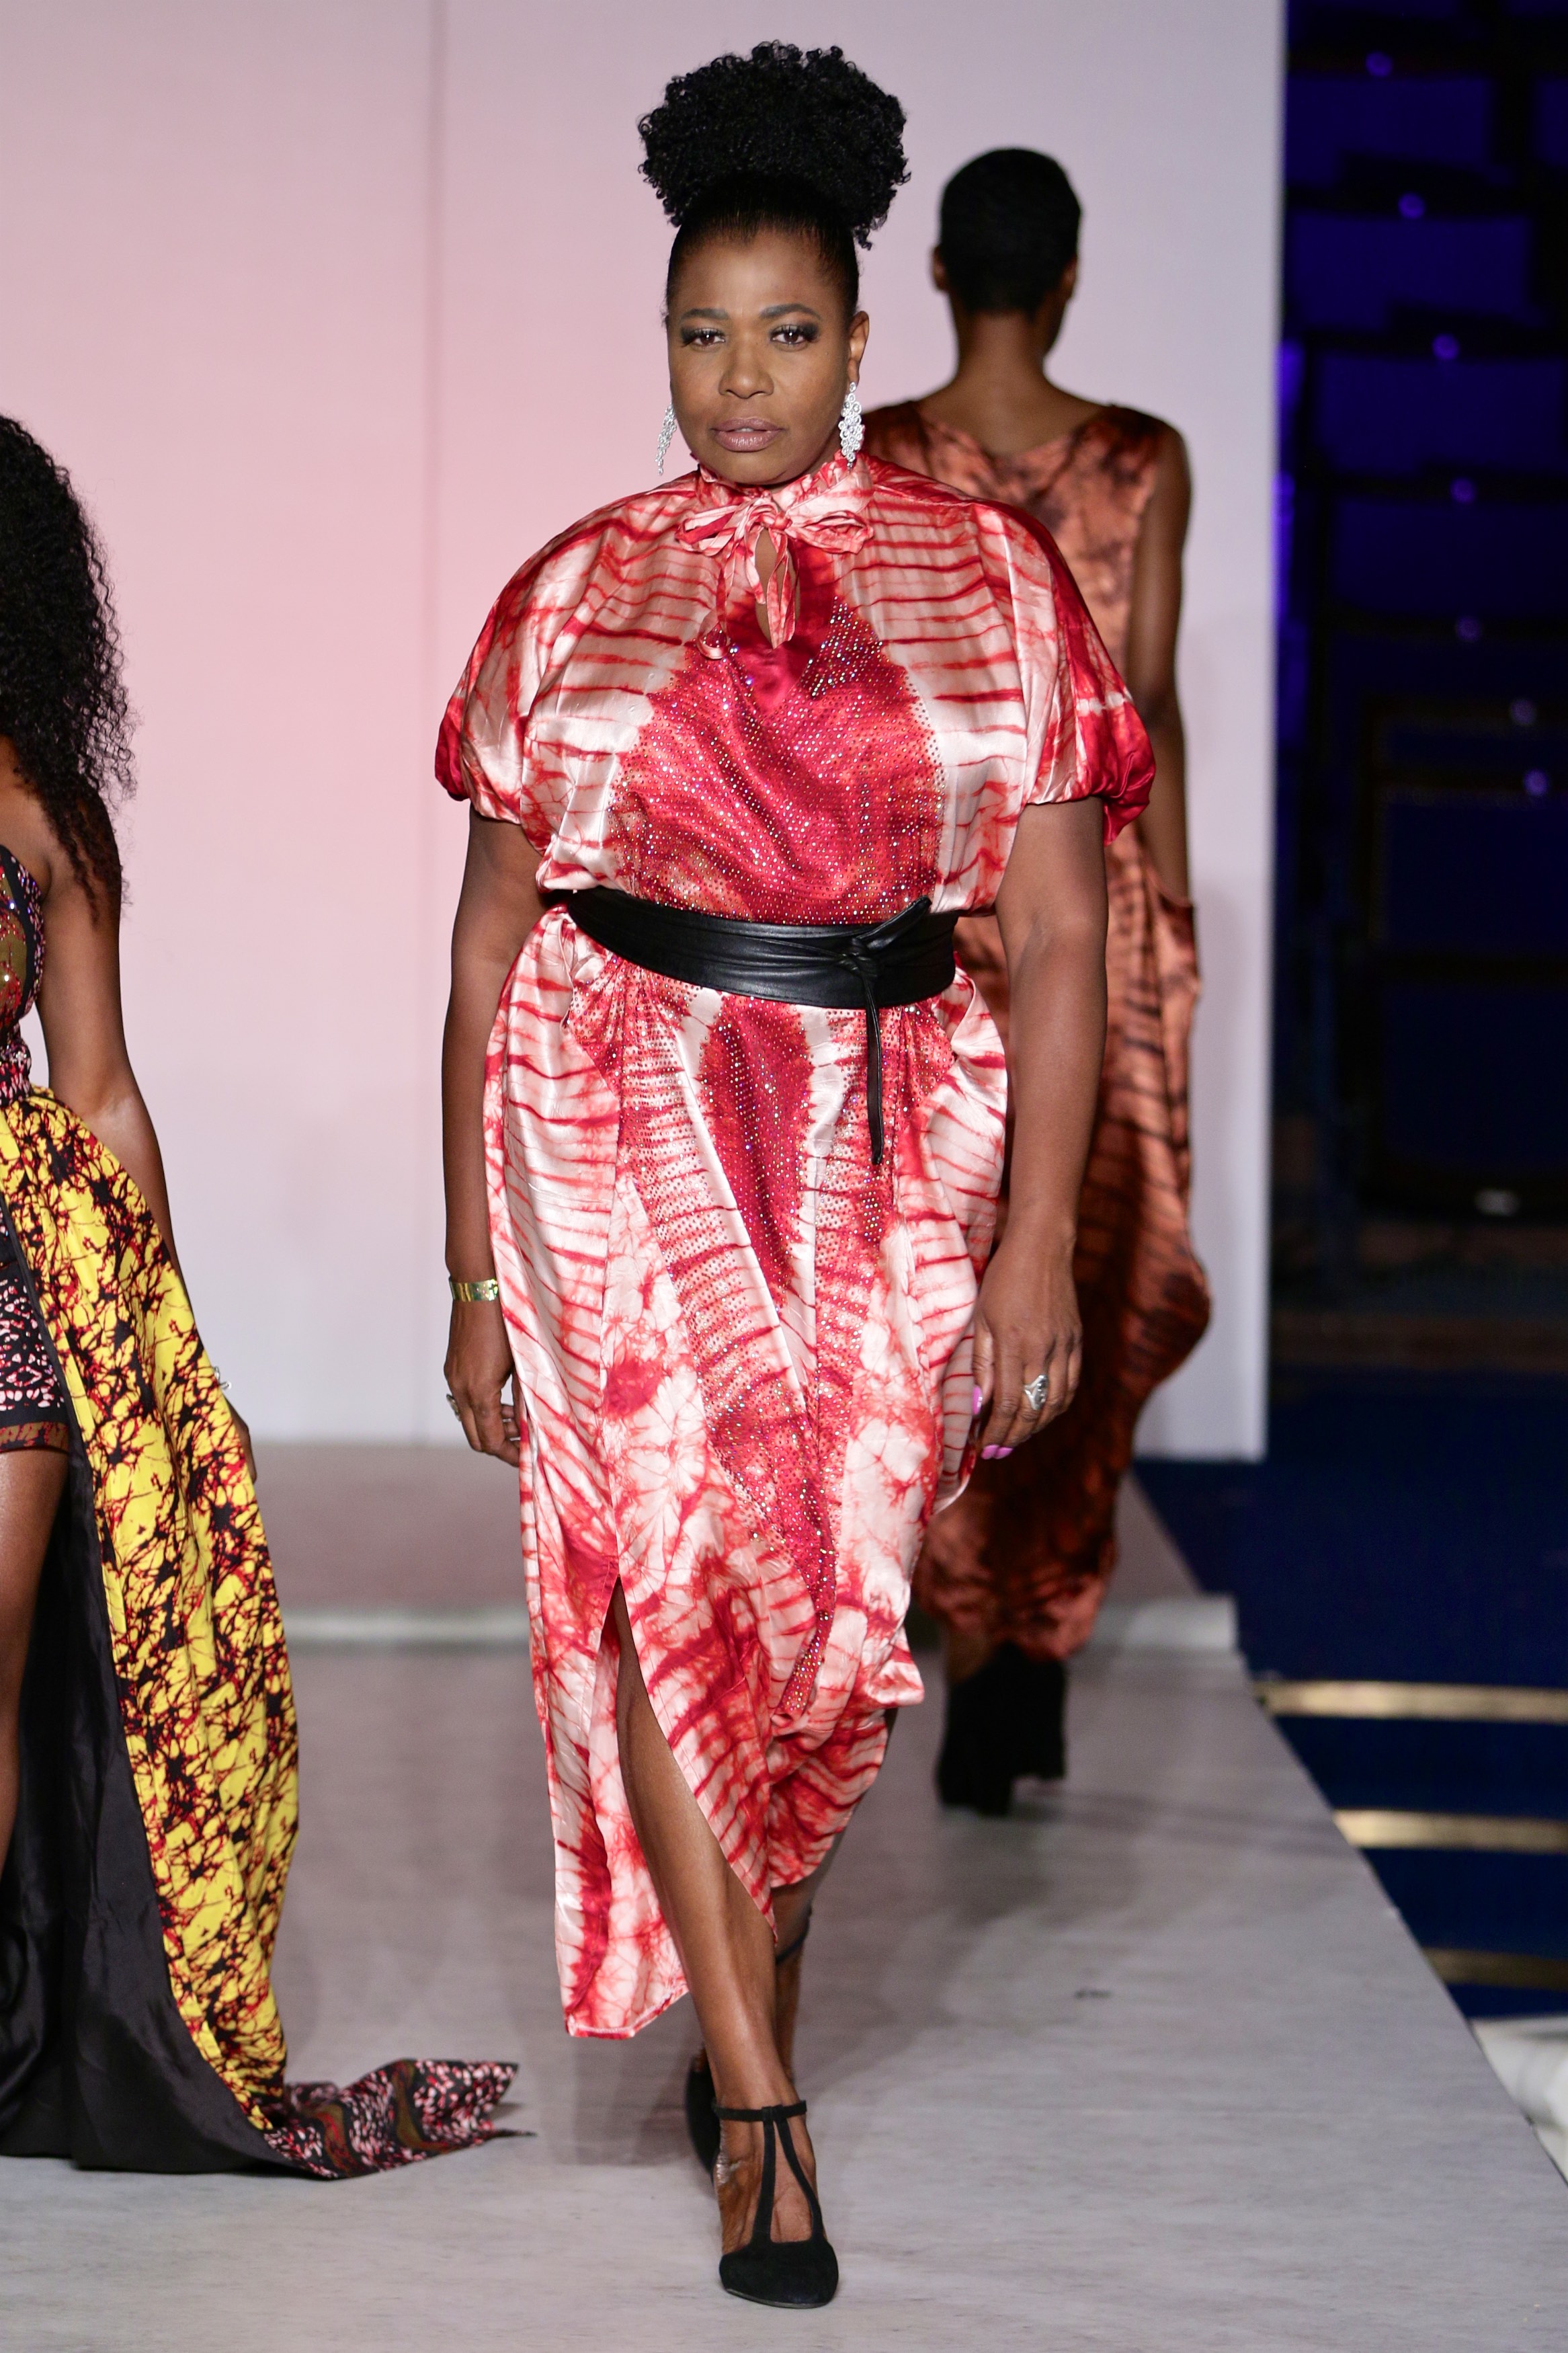 Africa Fashion Week London 2019 | Ile Moremi Celebrity | BN Style